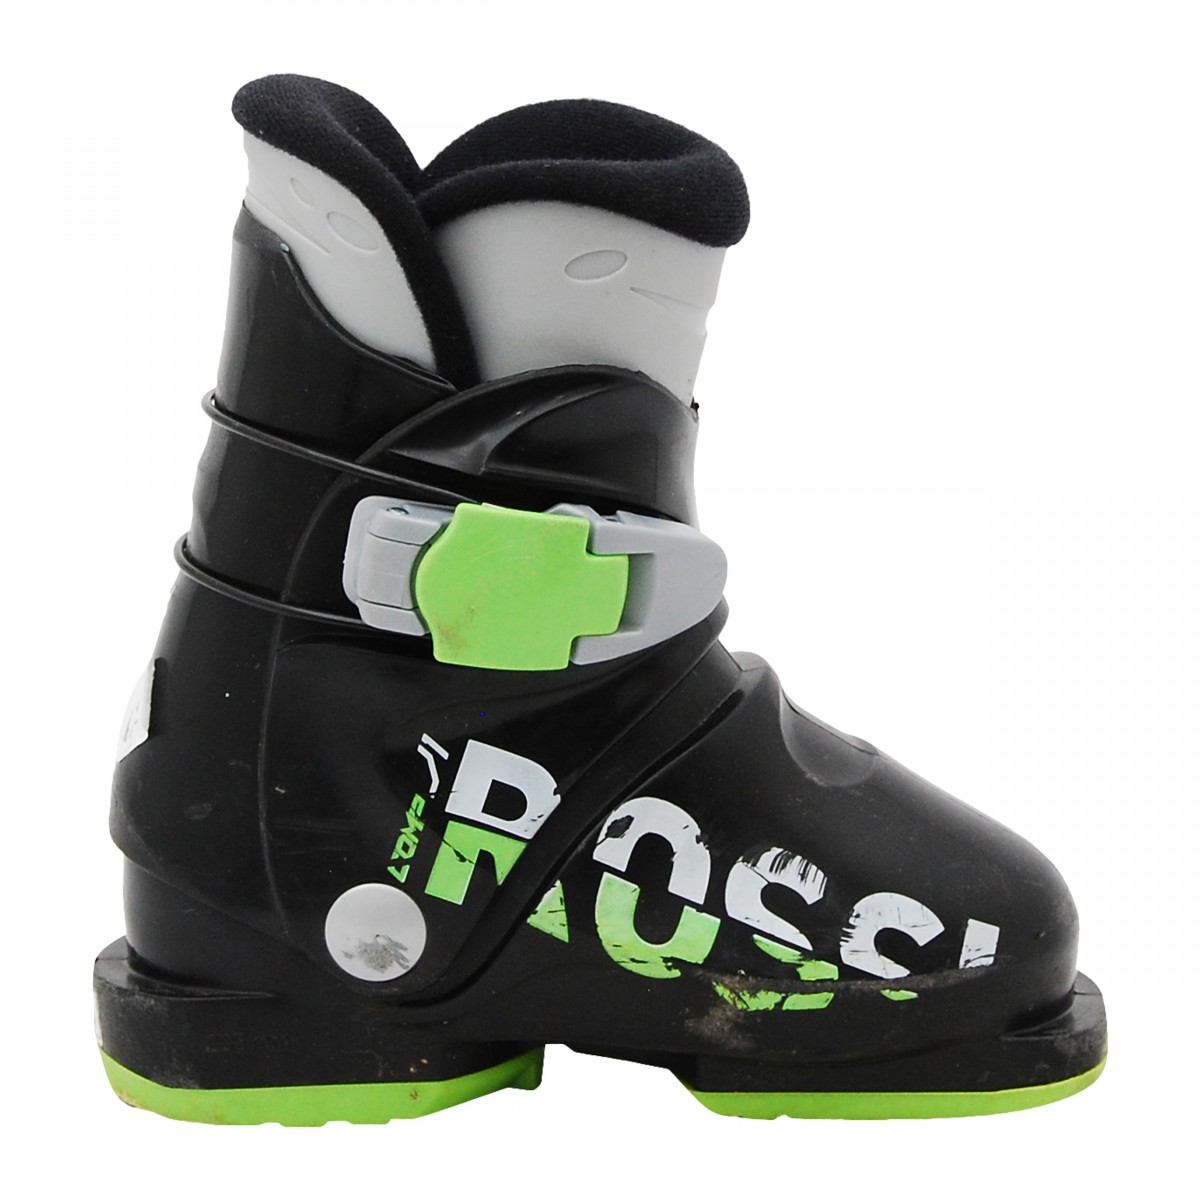 Boot skiing occasion junior Rossignol comp j black white green